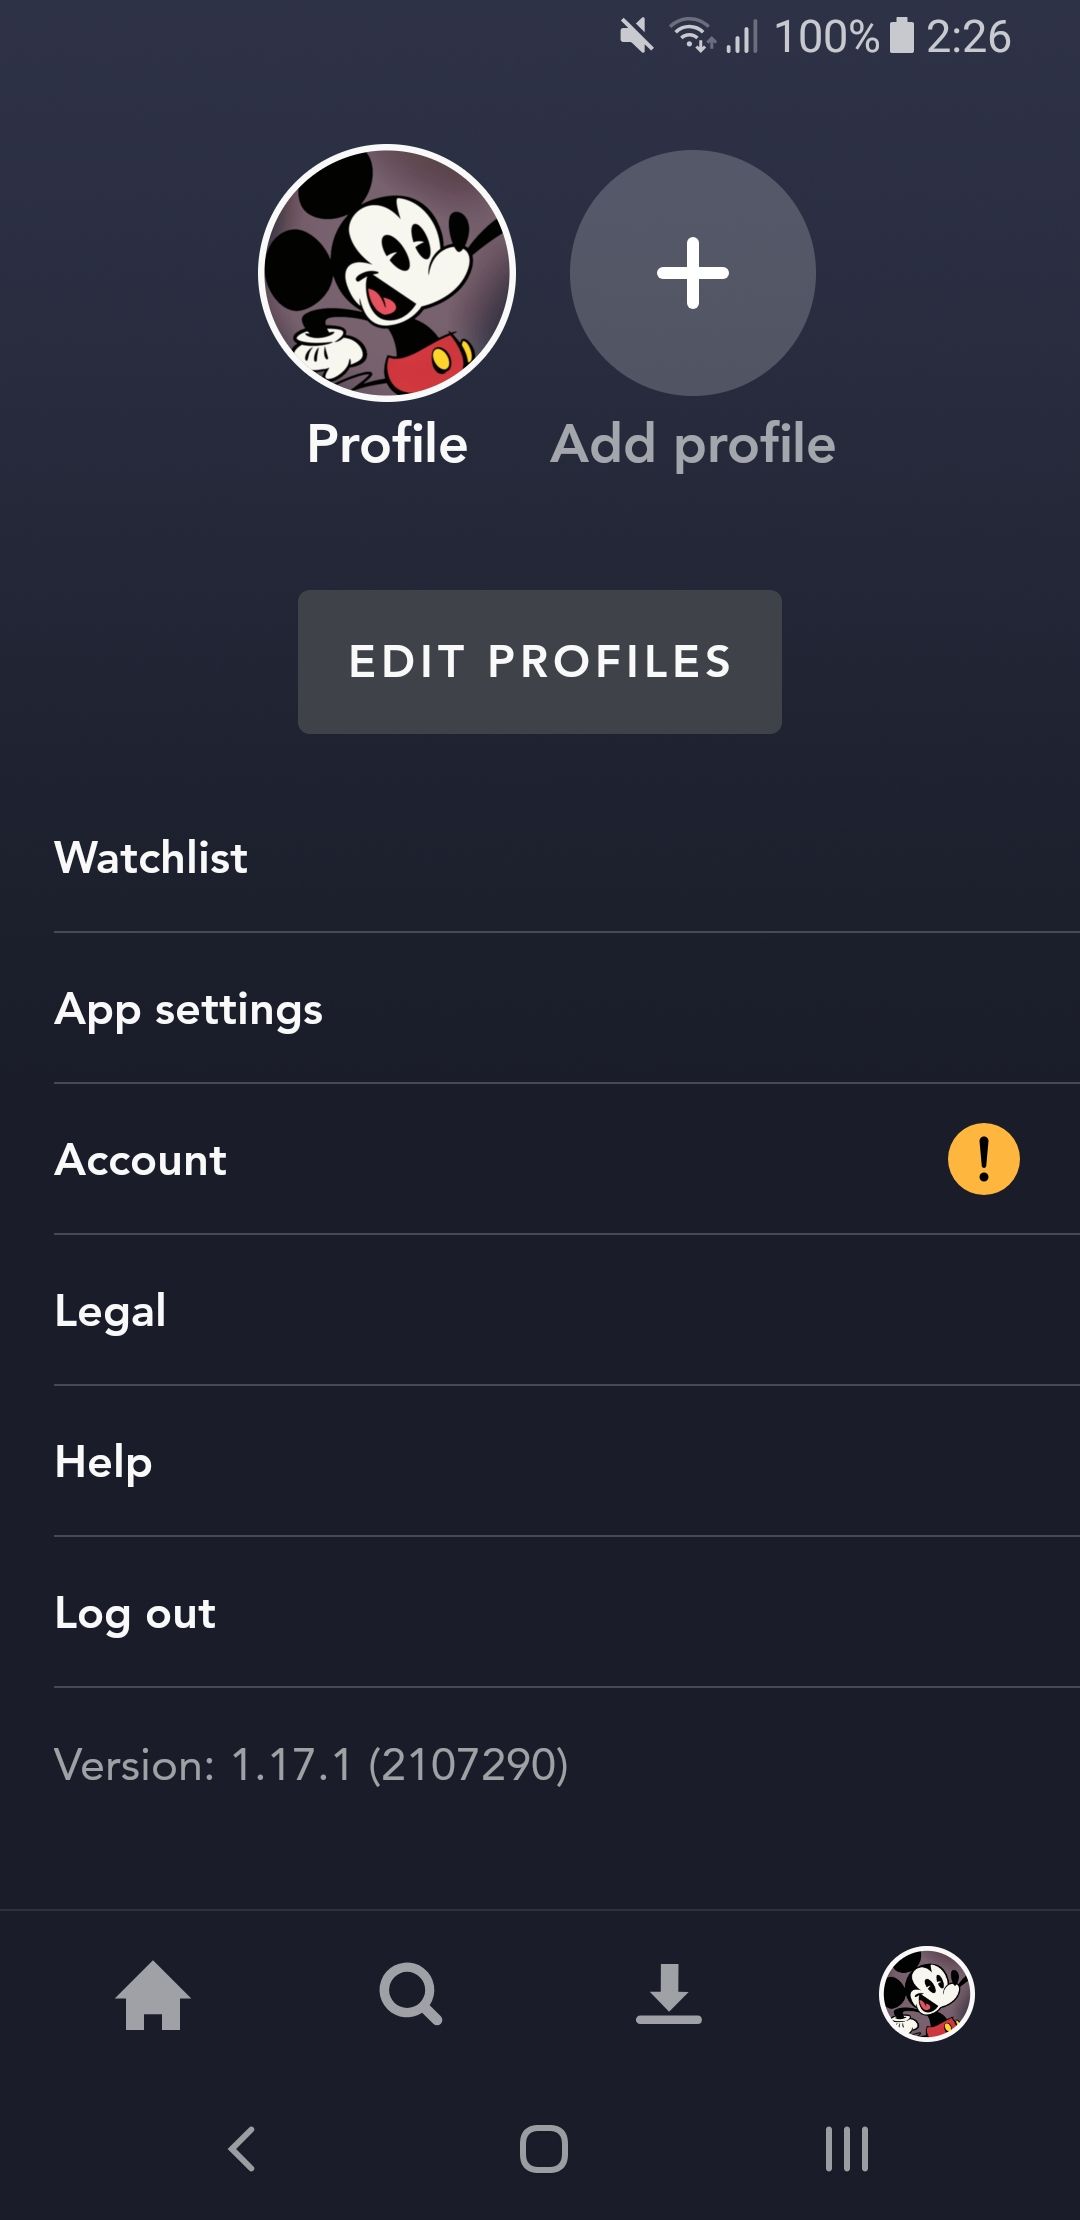 A screenshot of the Disney+ app showing profiles